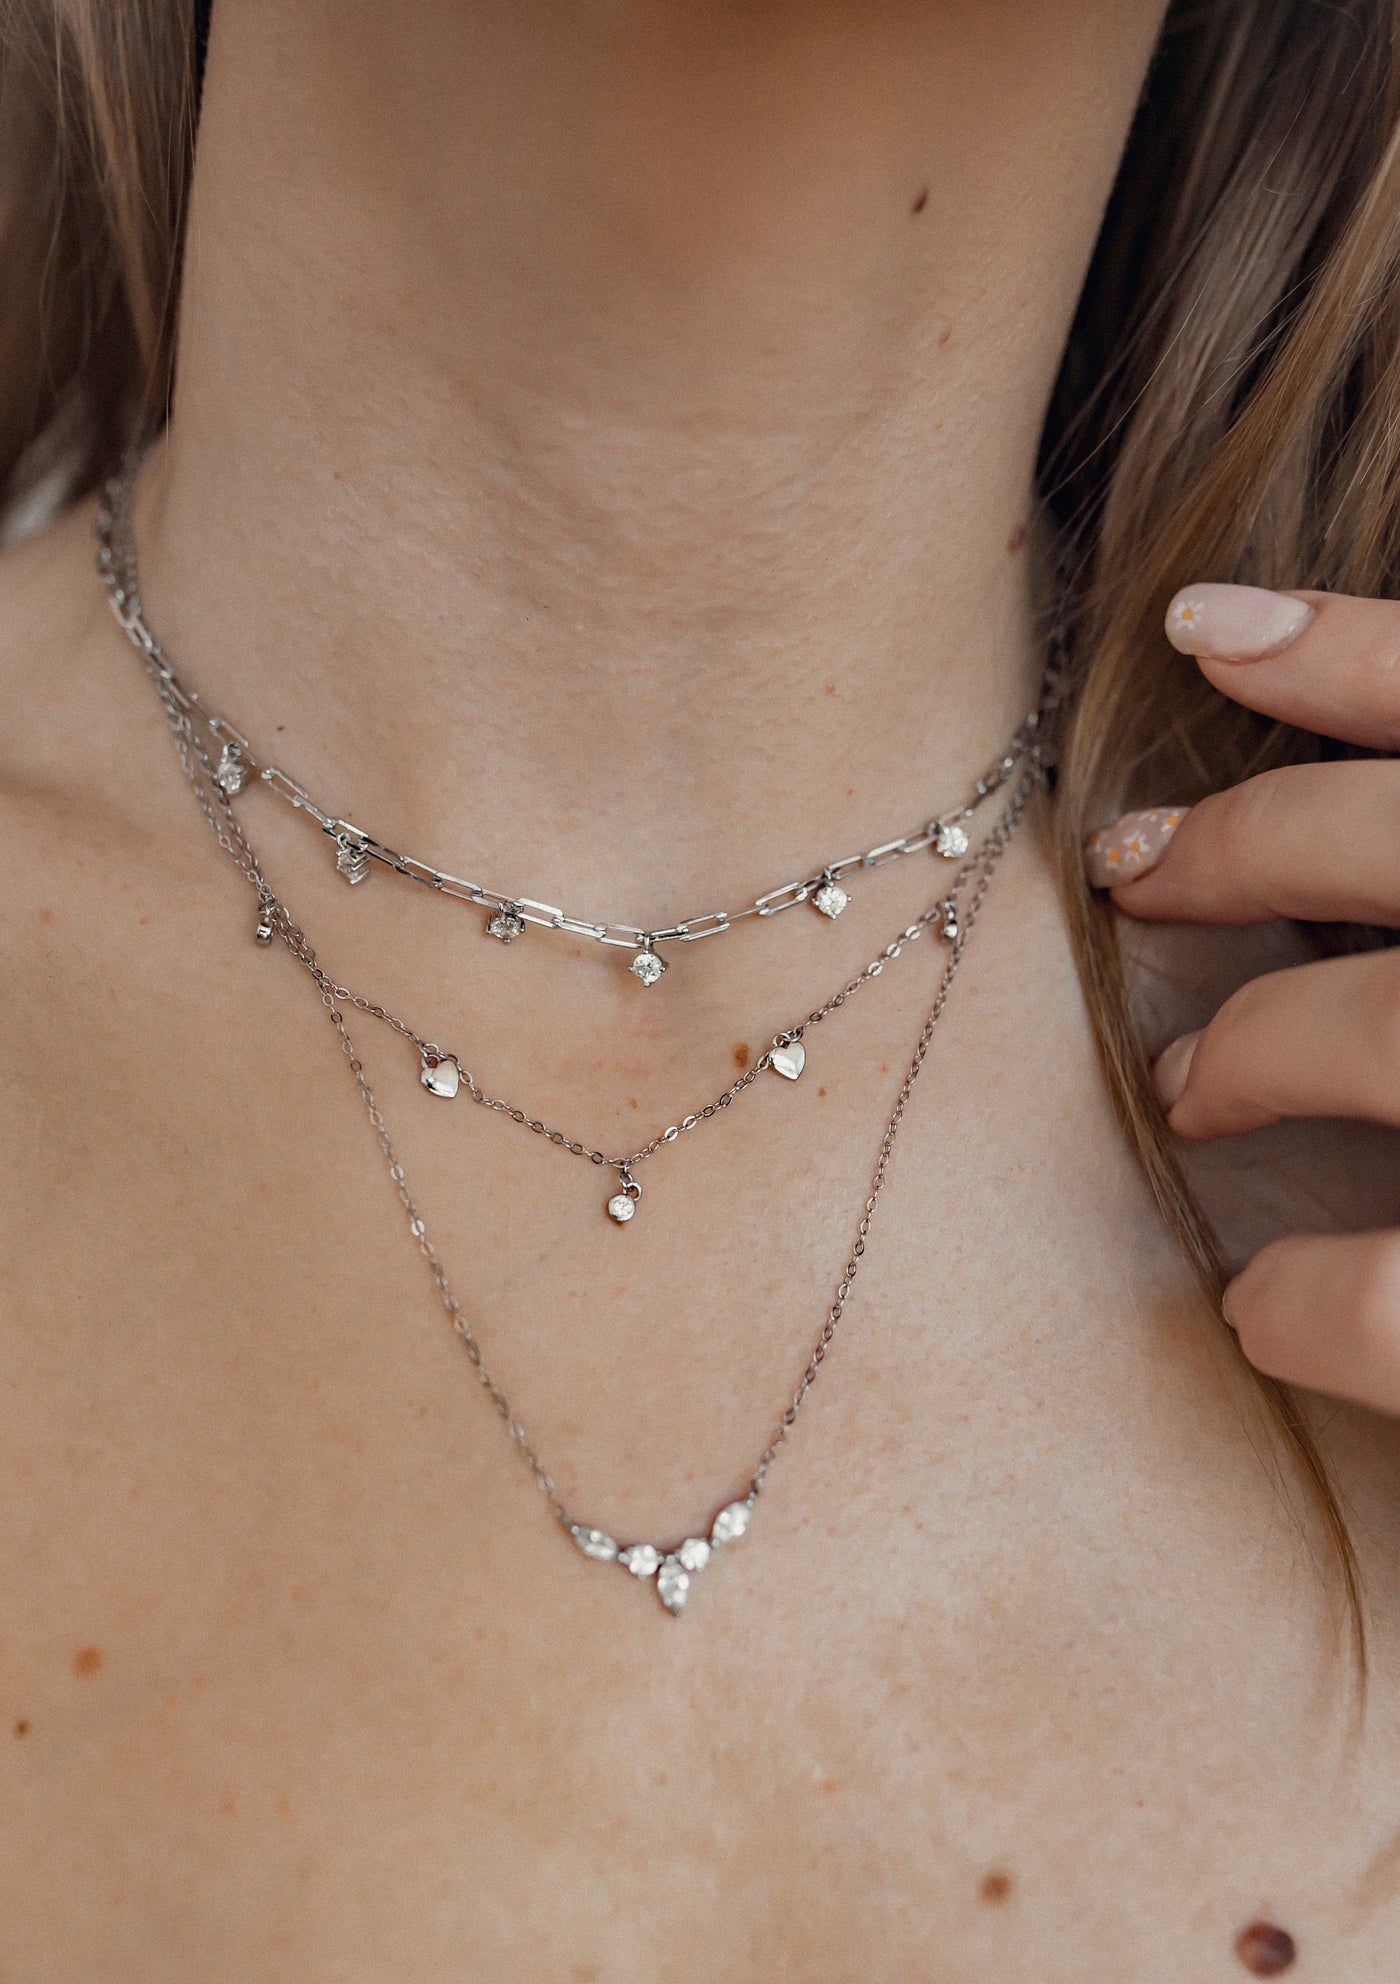 Gemstone Crown Necklace Sterling Silver